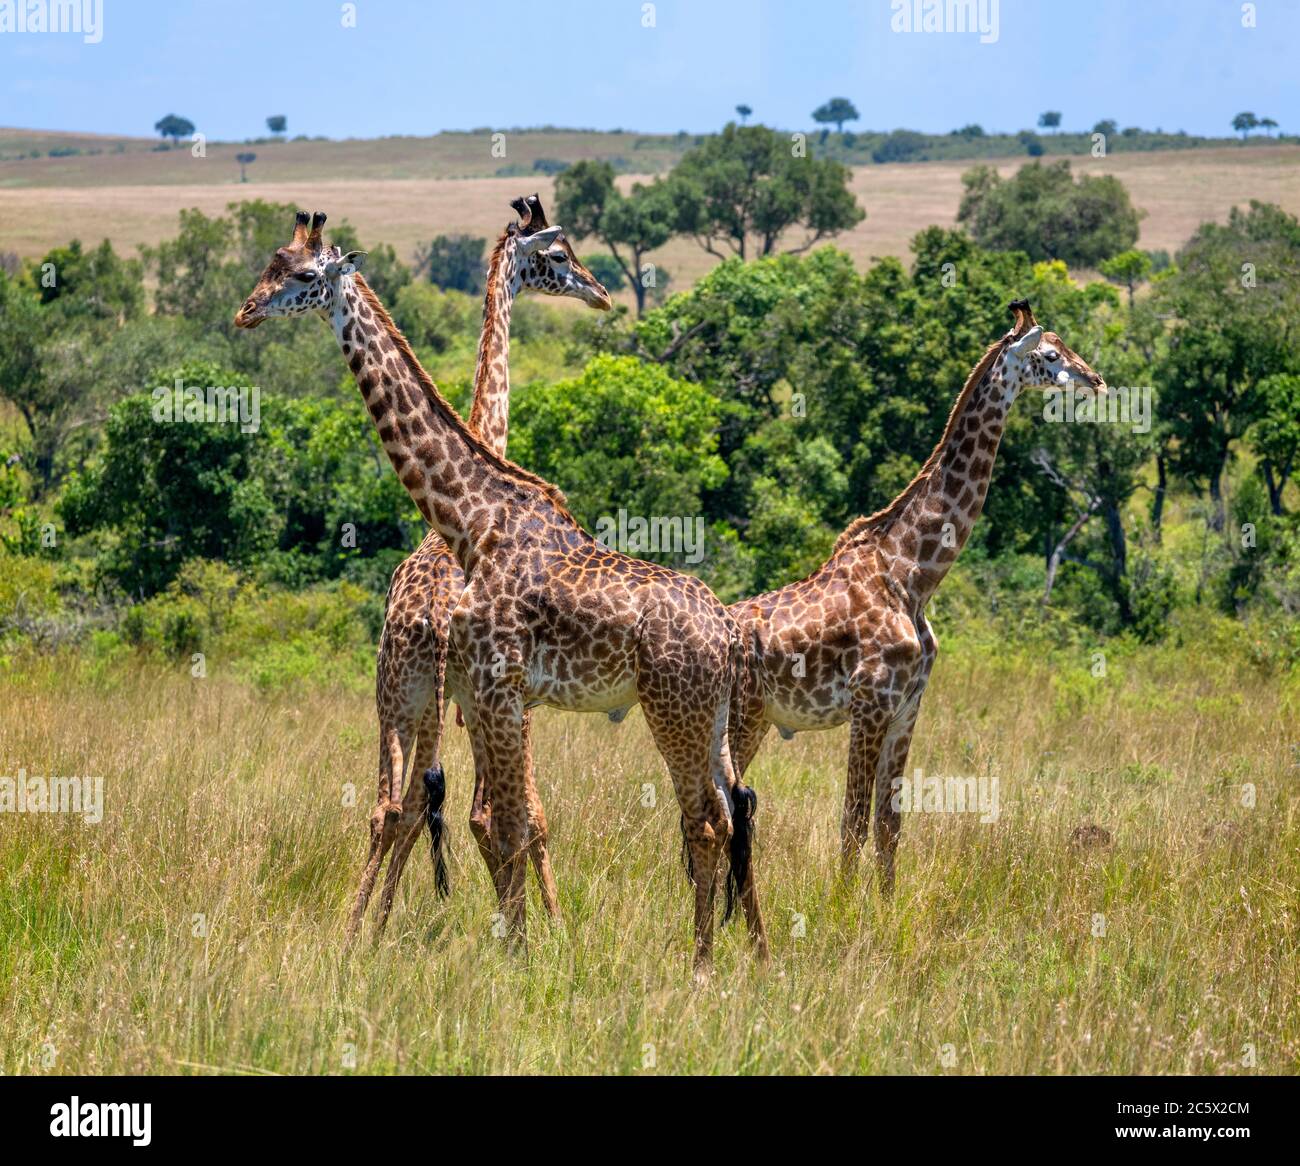 Girafe de Masai (Giraffa camelopardalis tippelskirchii). Groupe de girafes Masai dans la réserve nationale Masai Mara, Kenya, Afrique Banque D'Images